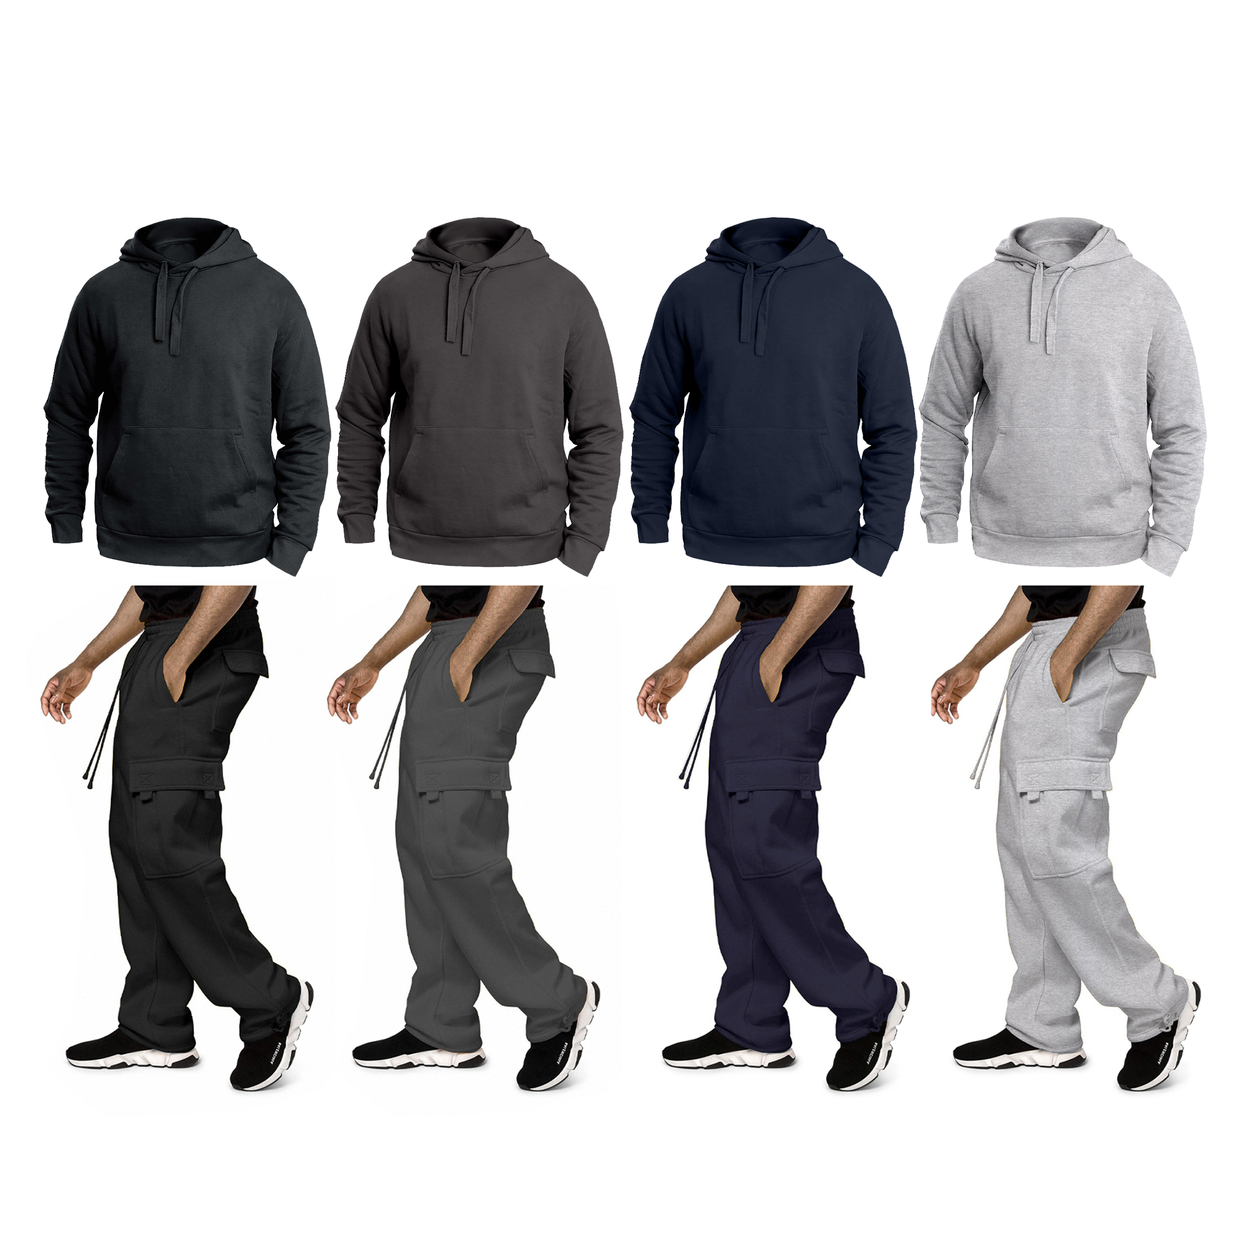 Men's Big & Tall Winter Warm Cozy Athletic Fleece Lined Multi-Pocket Cargo Sweatsuit - Grey, Small